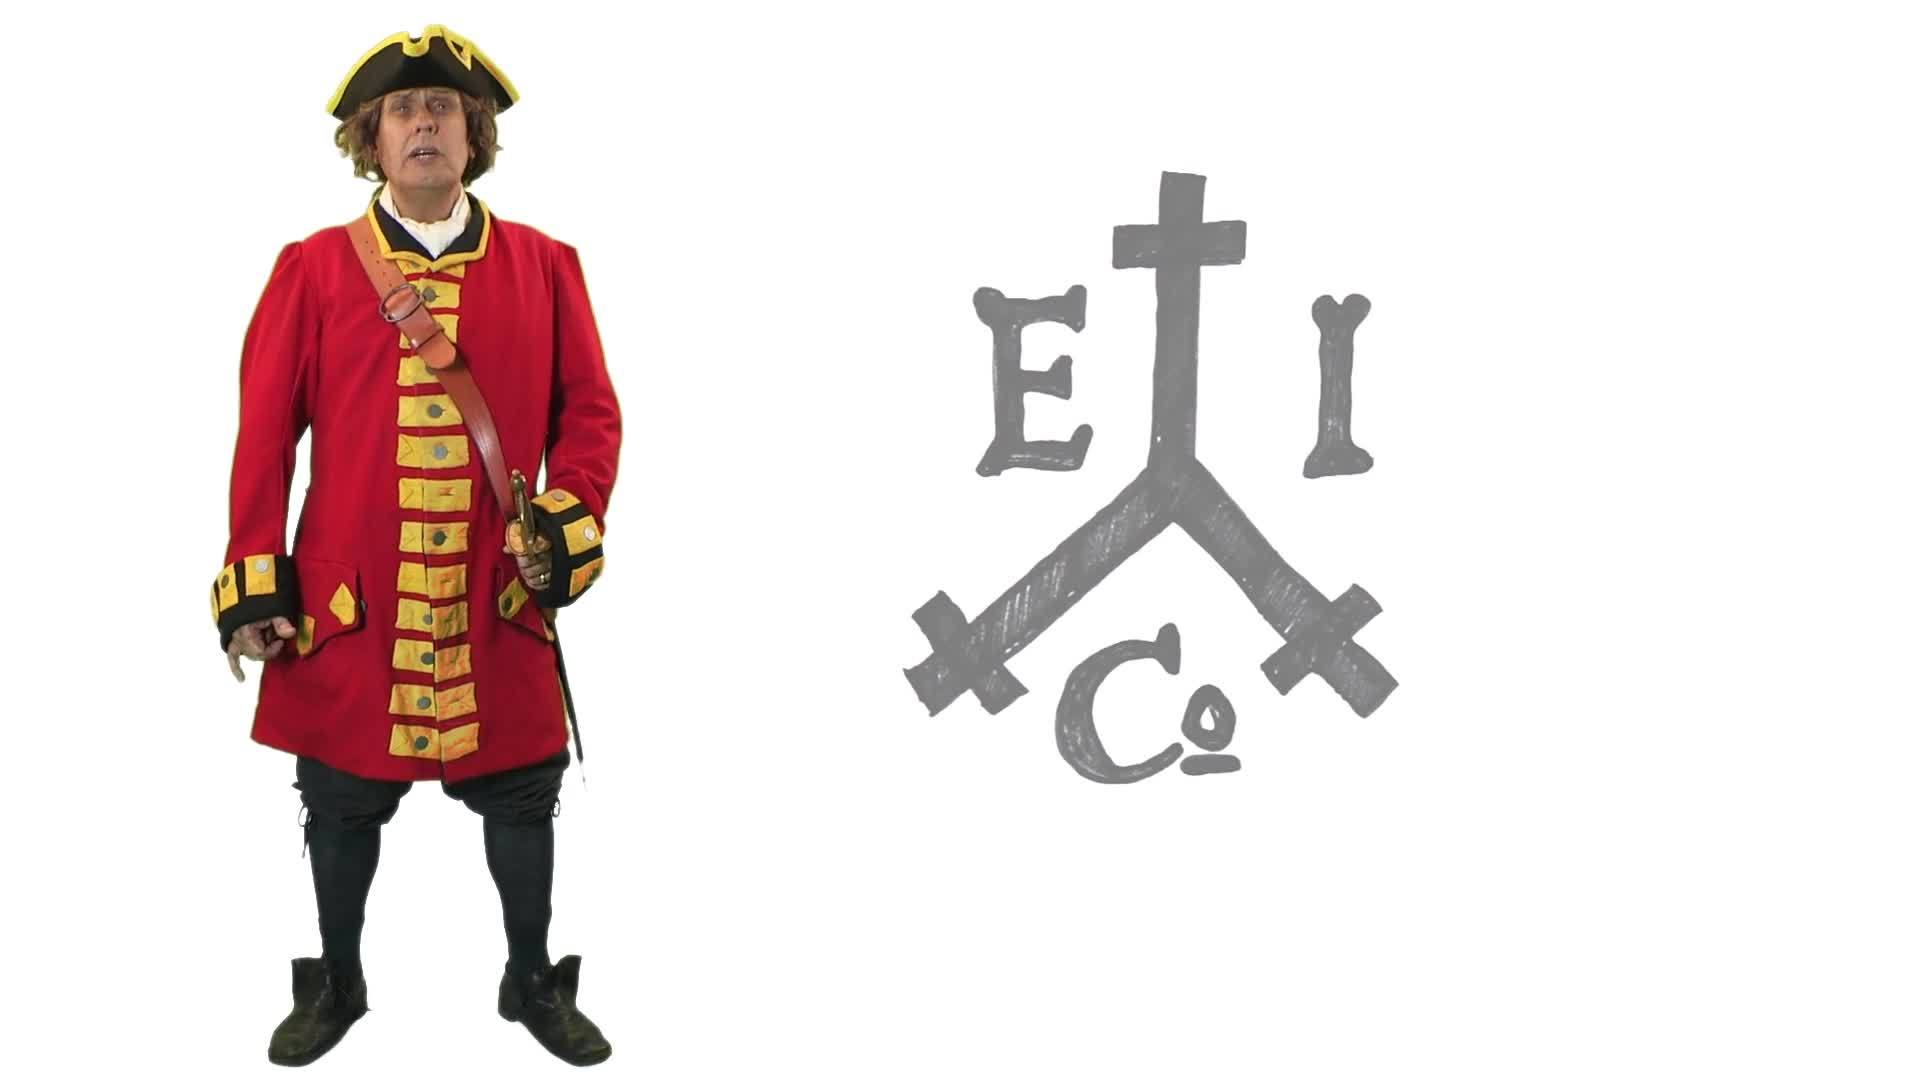 The East India Company